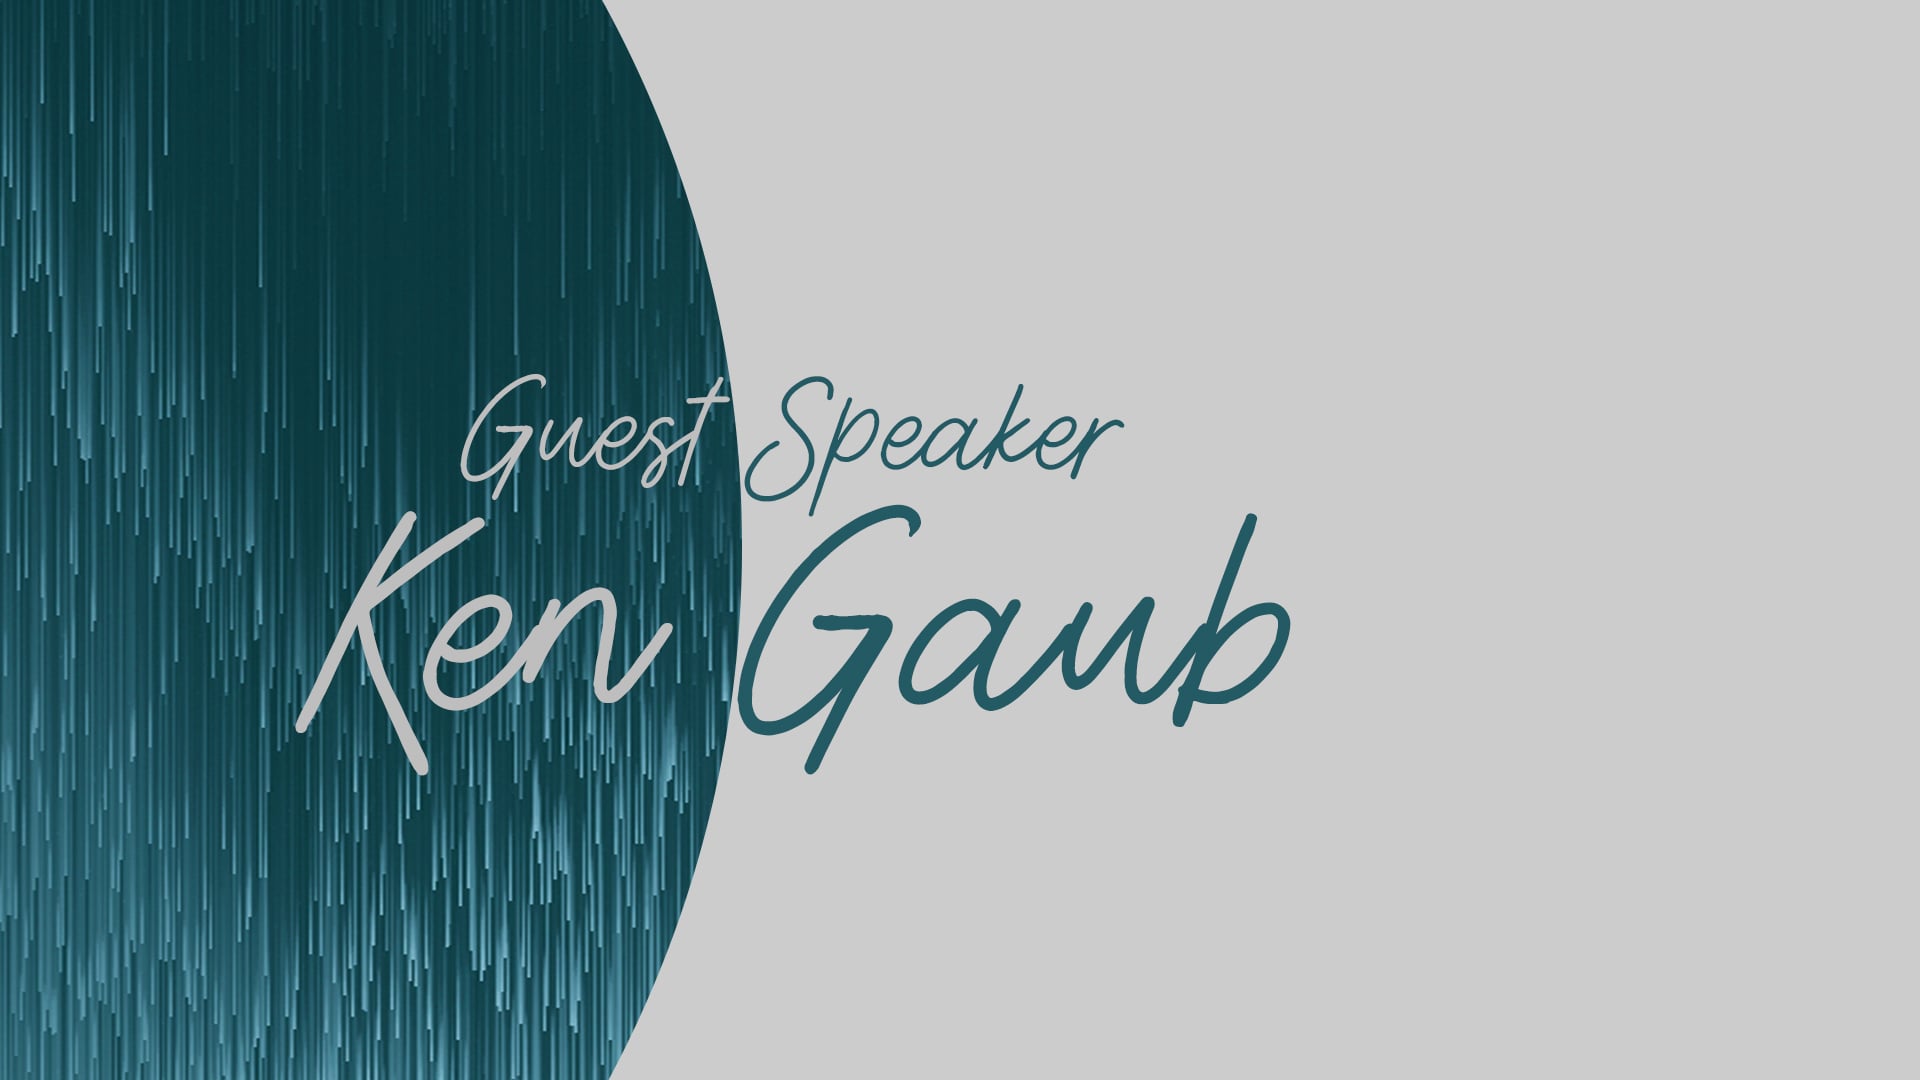 Guest Speaker Ken Gaub